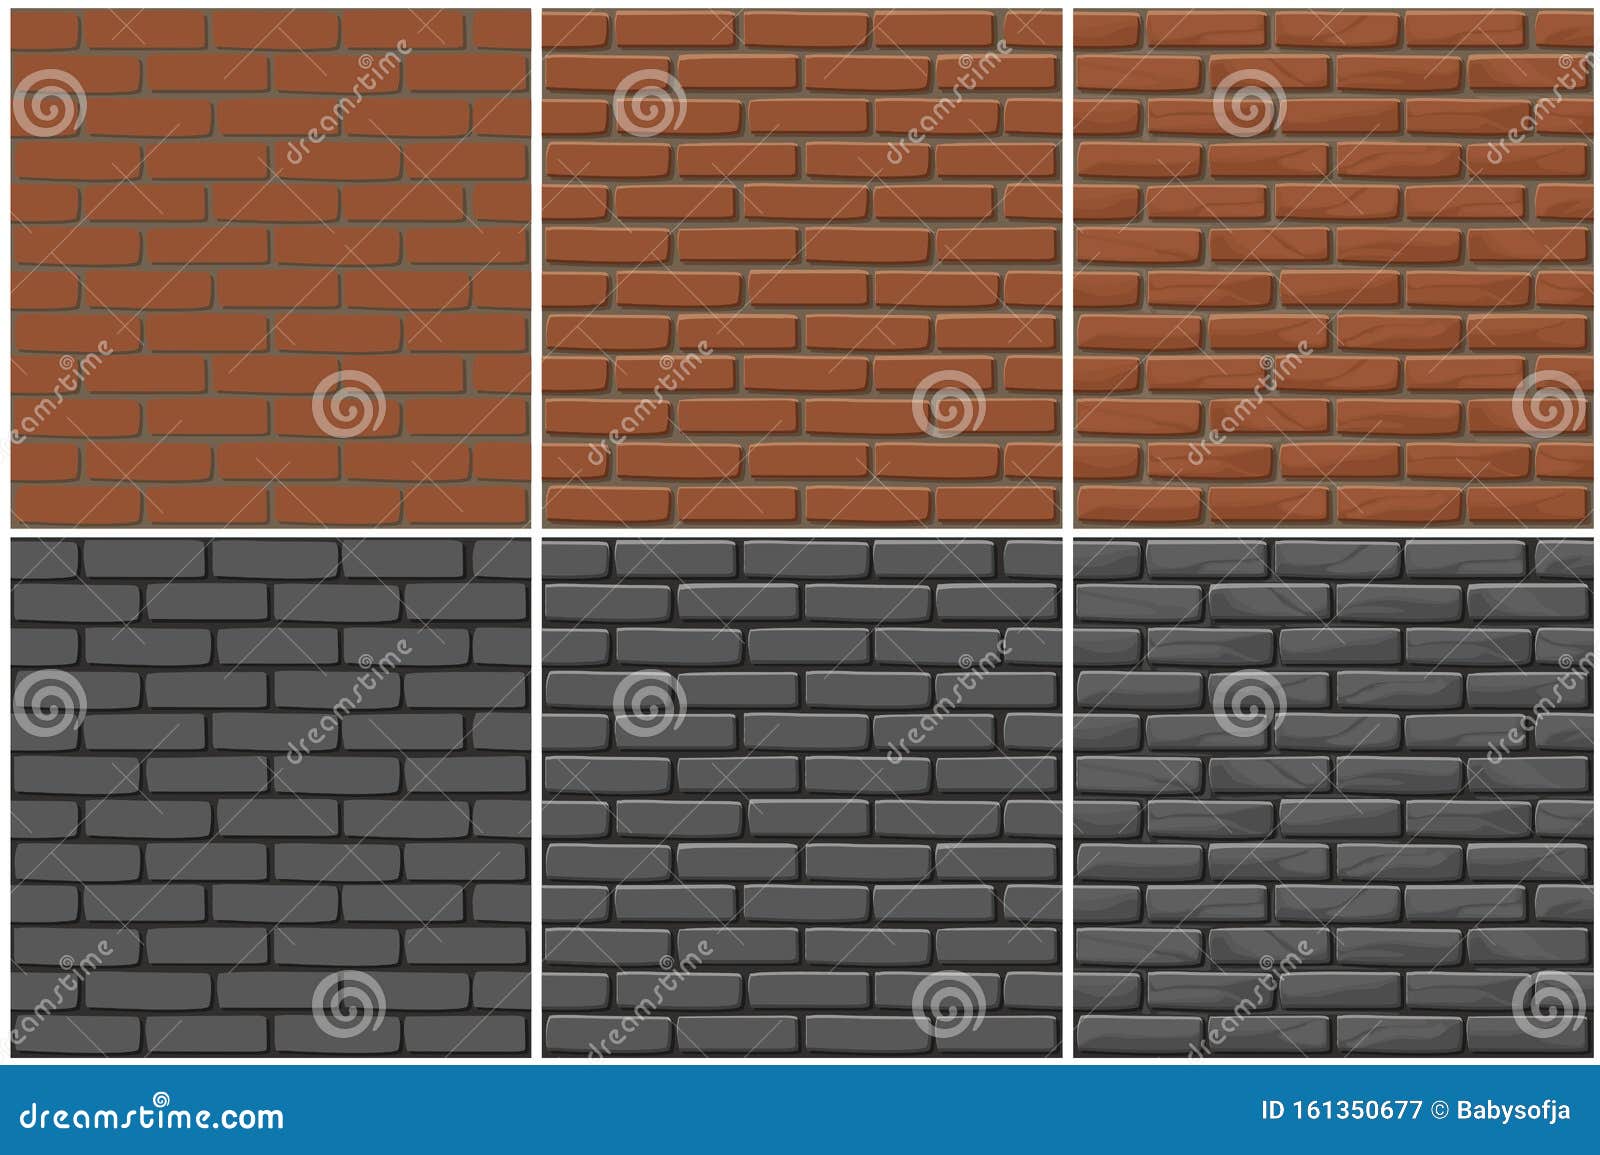 Brick Wall Texture Seamless 3 Step Drawing Vector Illustration Stones Wall Stock Vector Illustration Of Material Brick